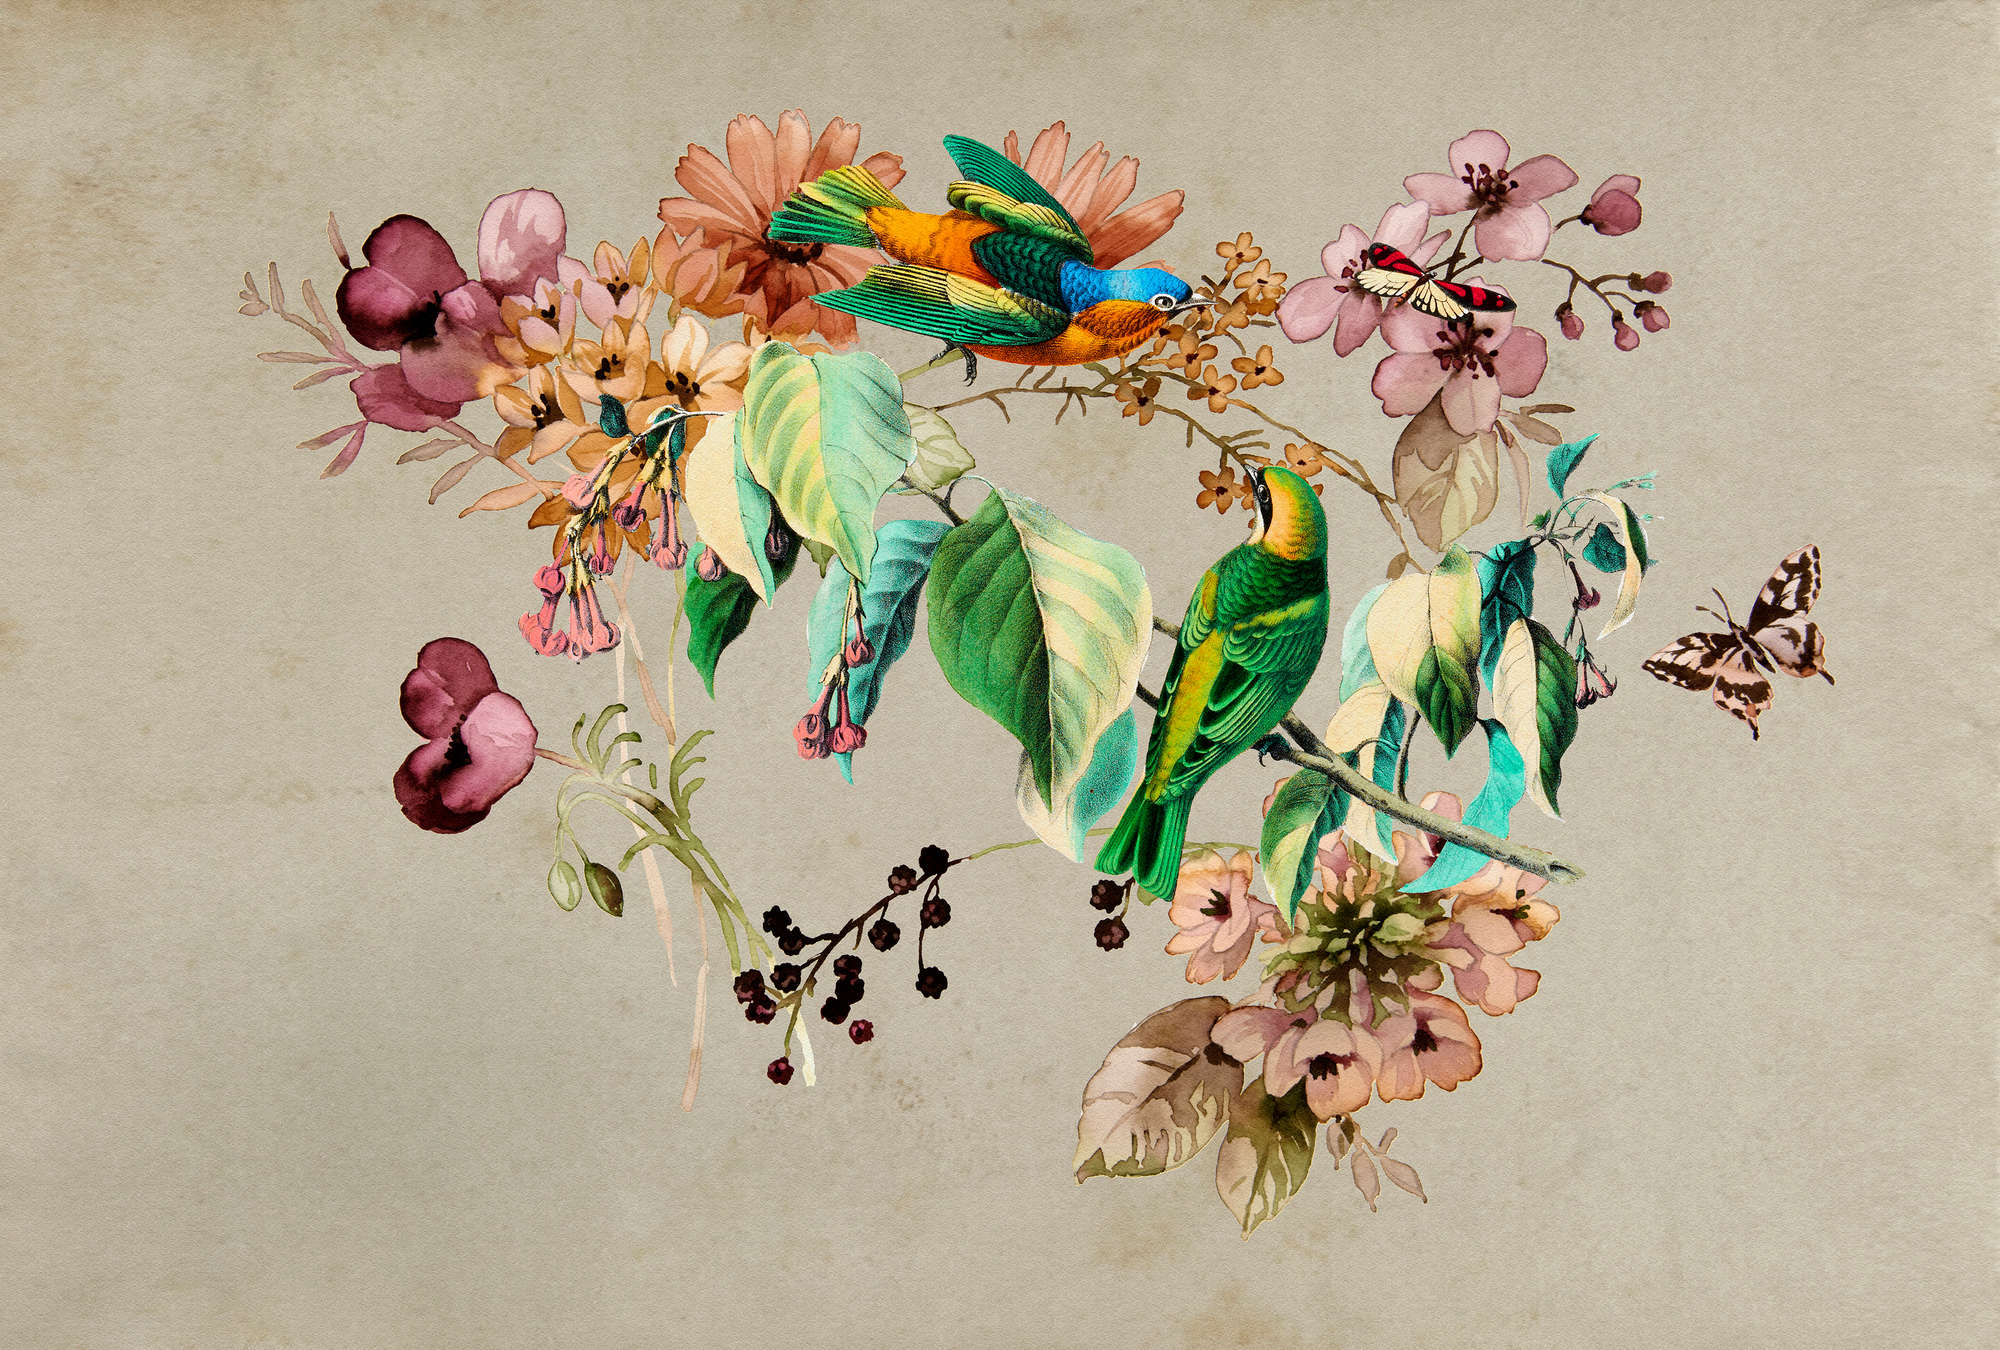             Love Nest 1 – Fototapete mit Aquarell Blüten & bunten Vögeln
        